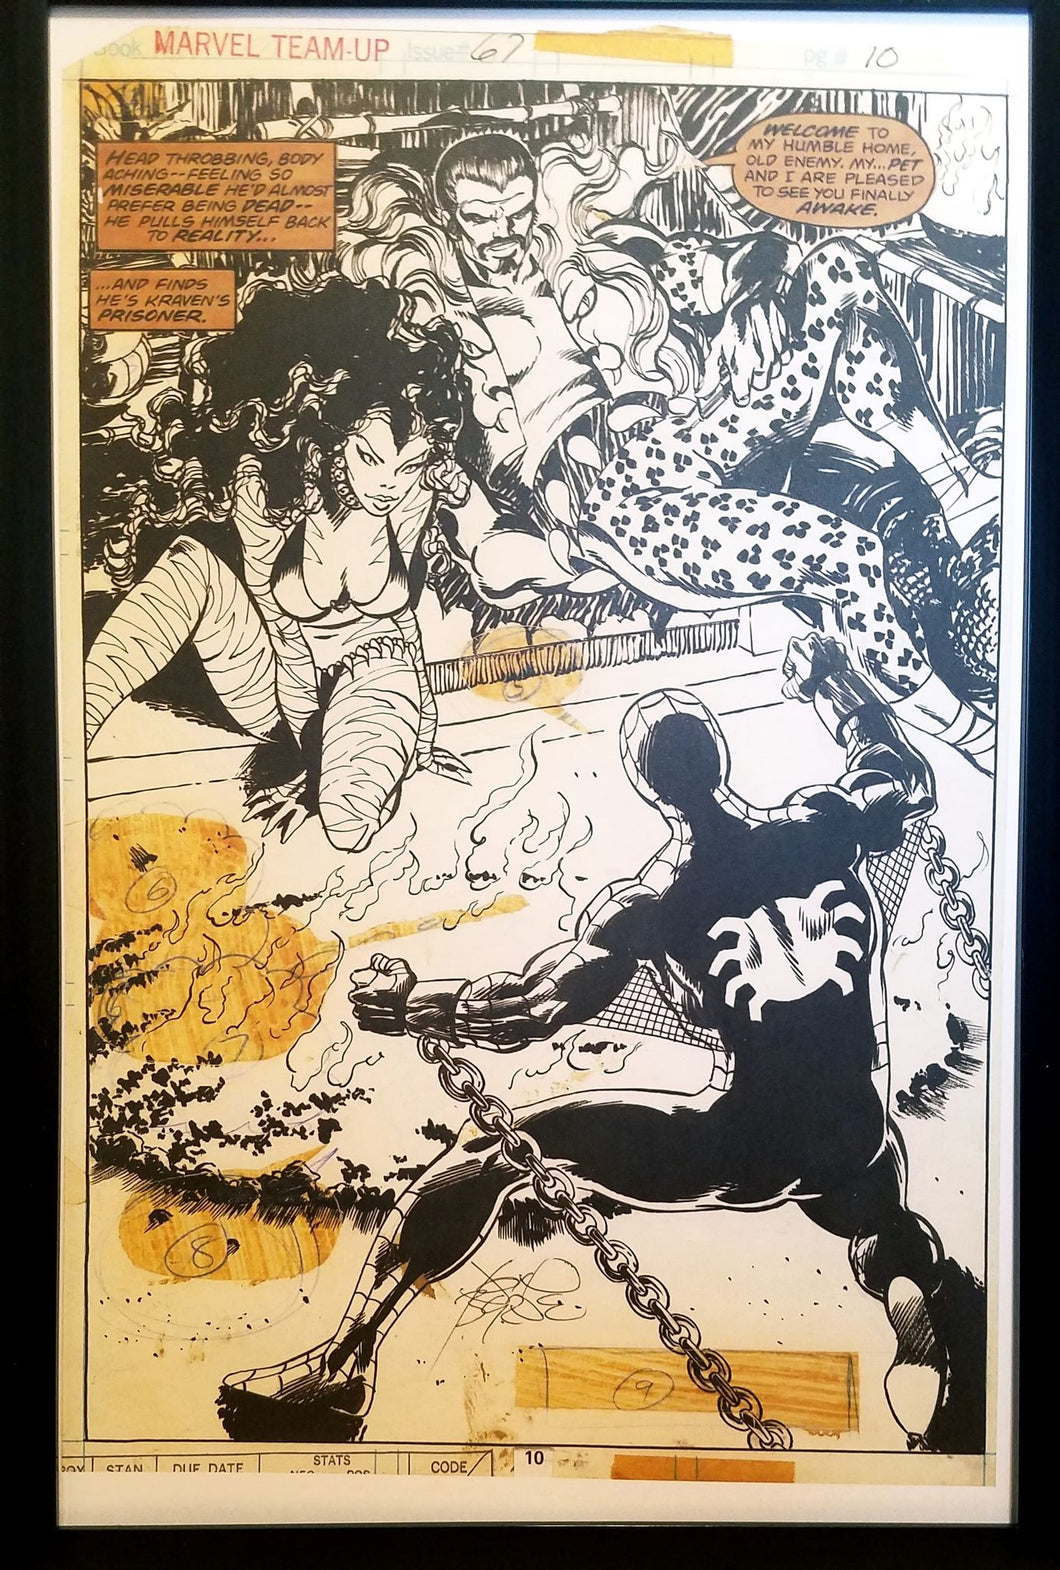 Marvel Team-Up #67 Spider-Man John Byrne 11x17 FRAMED Original Art Poster Comics